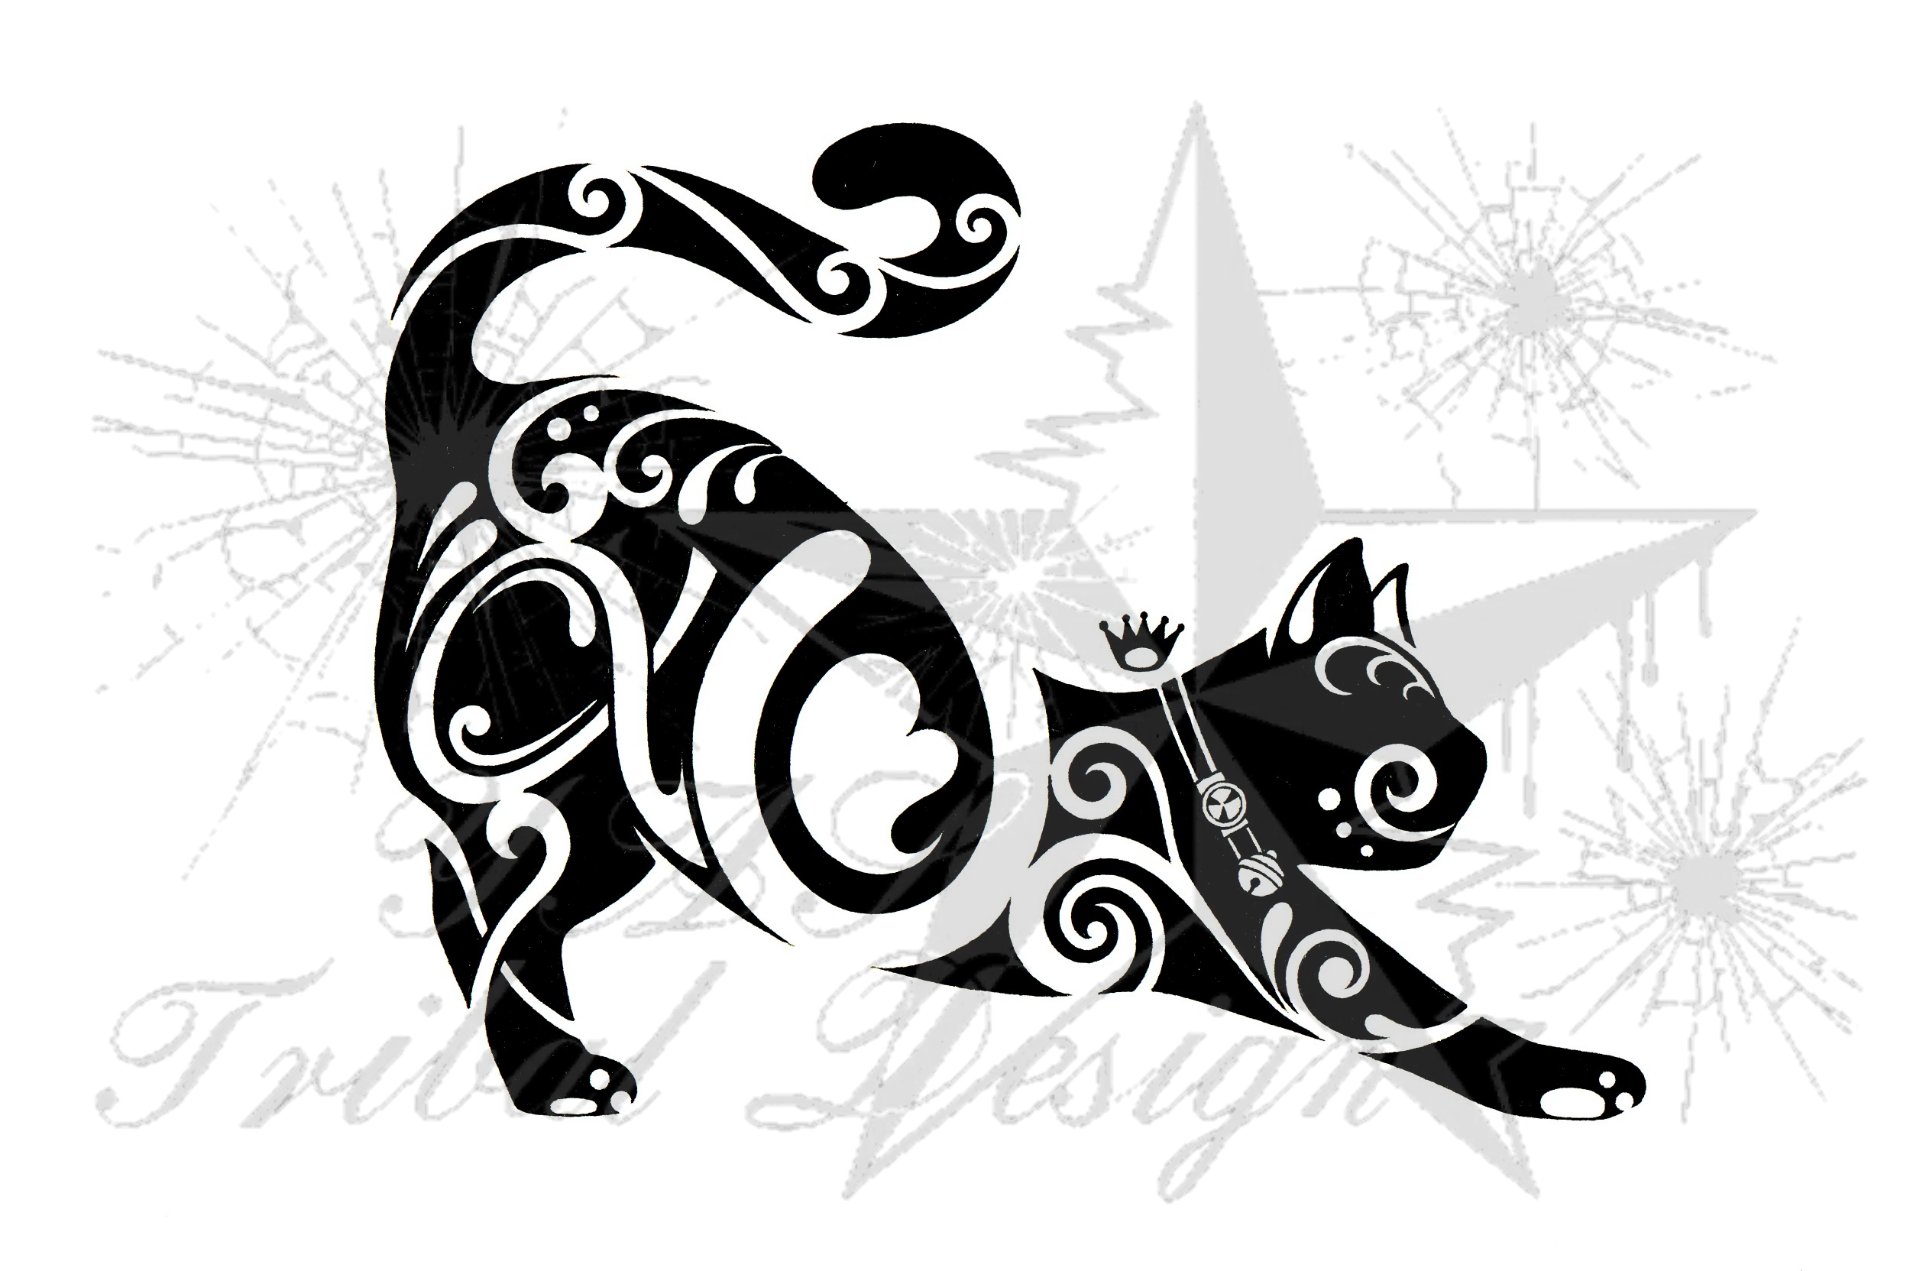 Twitter 上的 Yas ご依頼ありがとうございました シンプルトライバル猫ちゃん トライバル タトゥー デザイン ペン画 イラスト アナログ絵 猫 T Co E6hheu8jo5 Twitter